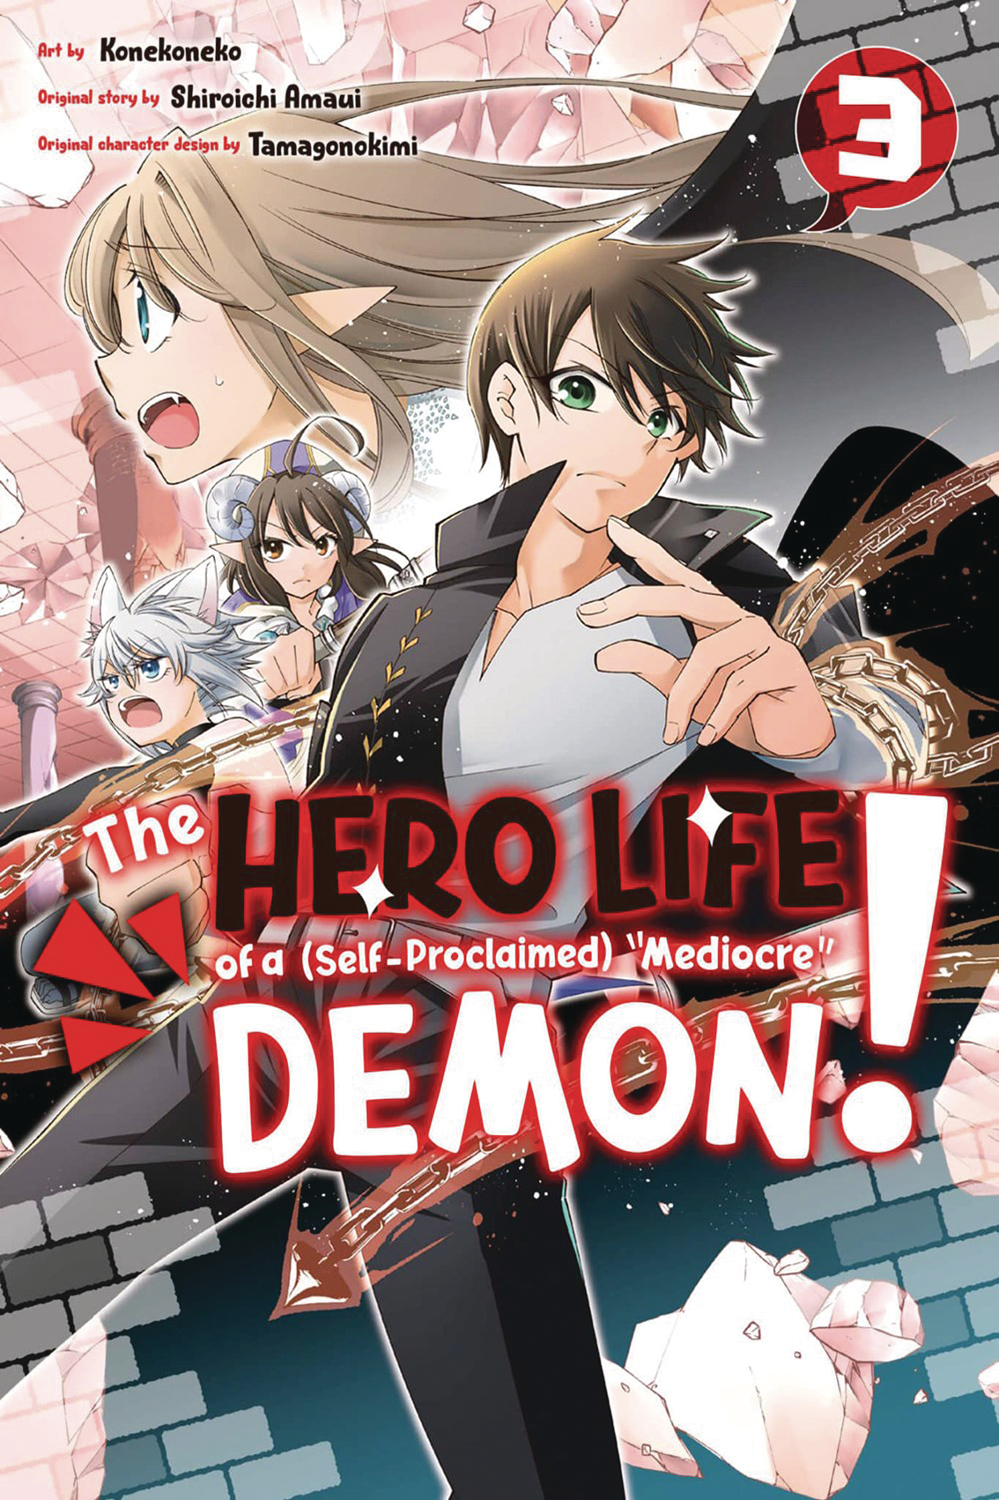 Hero Life of Self Proclaimed Mediocre Demon Manga Volume 3